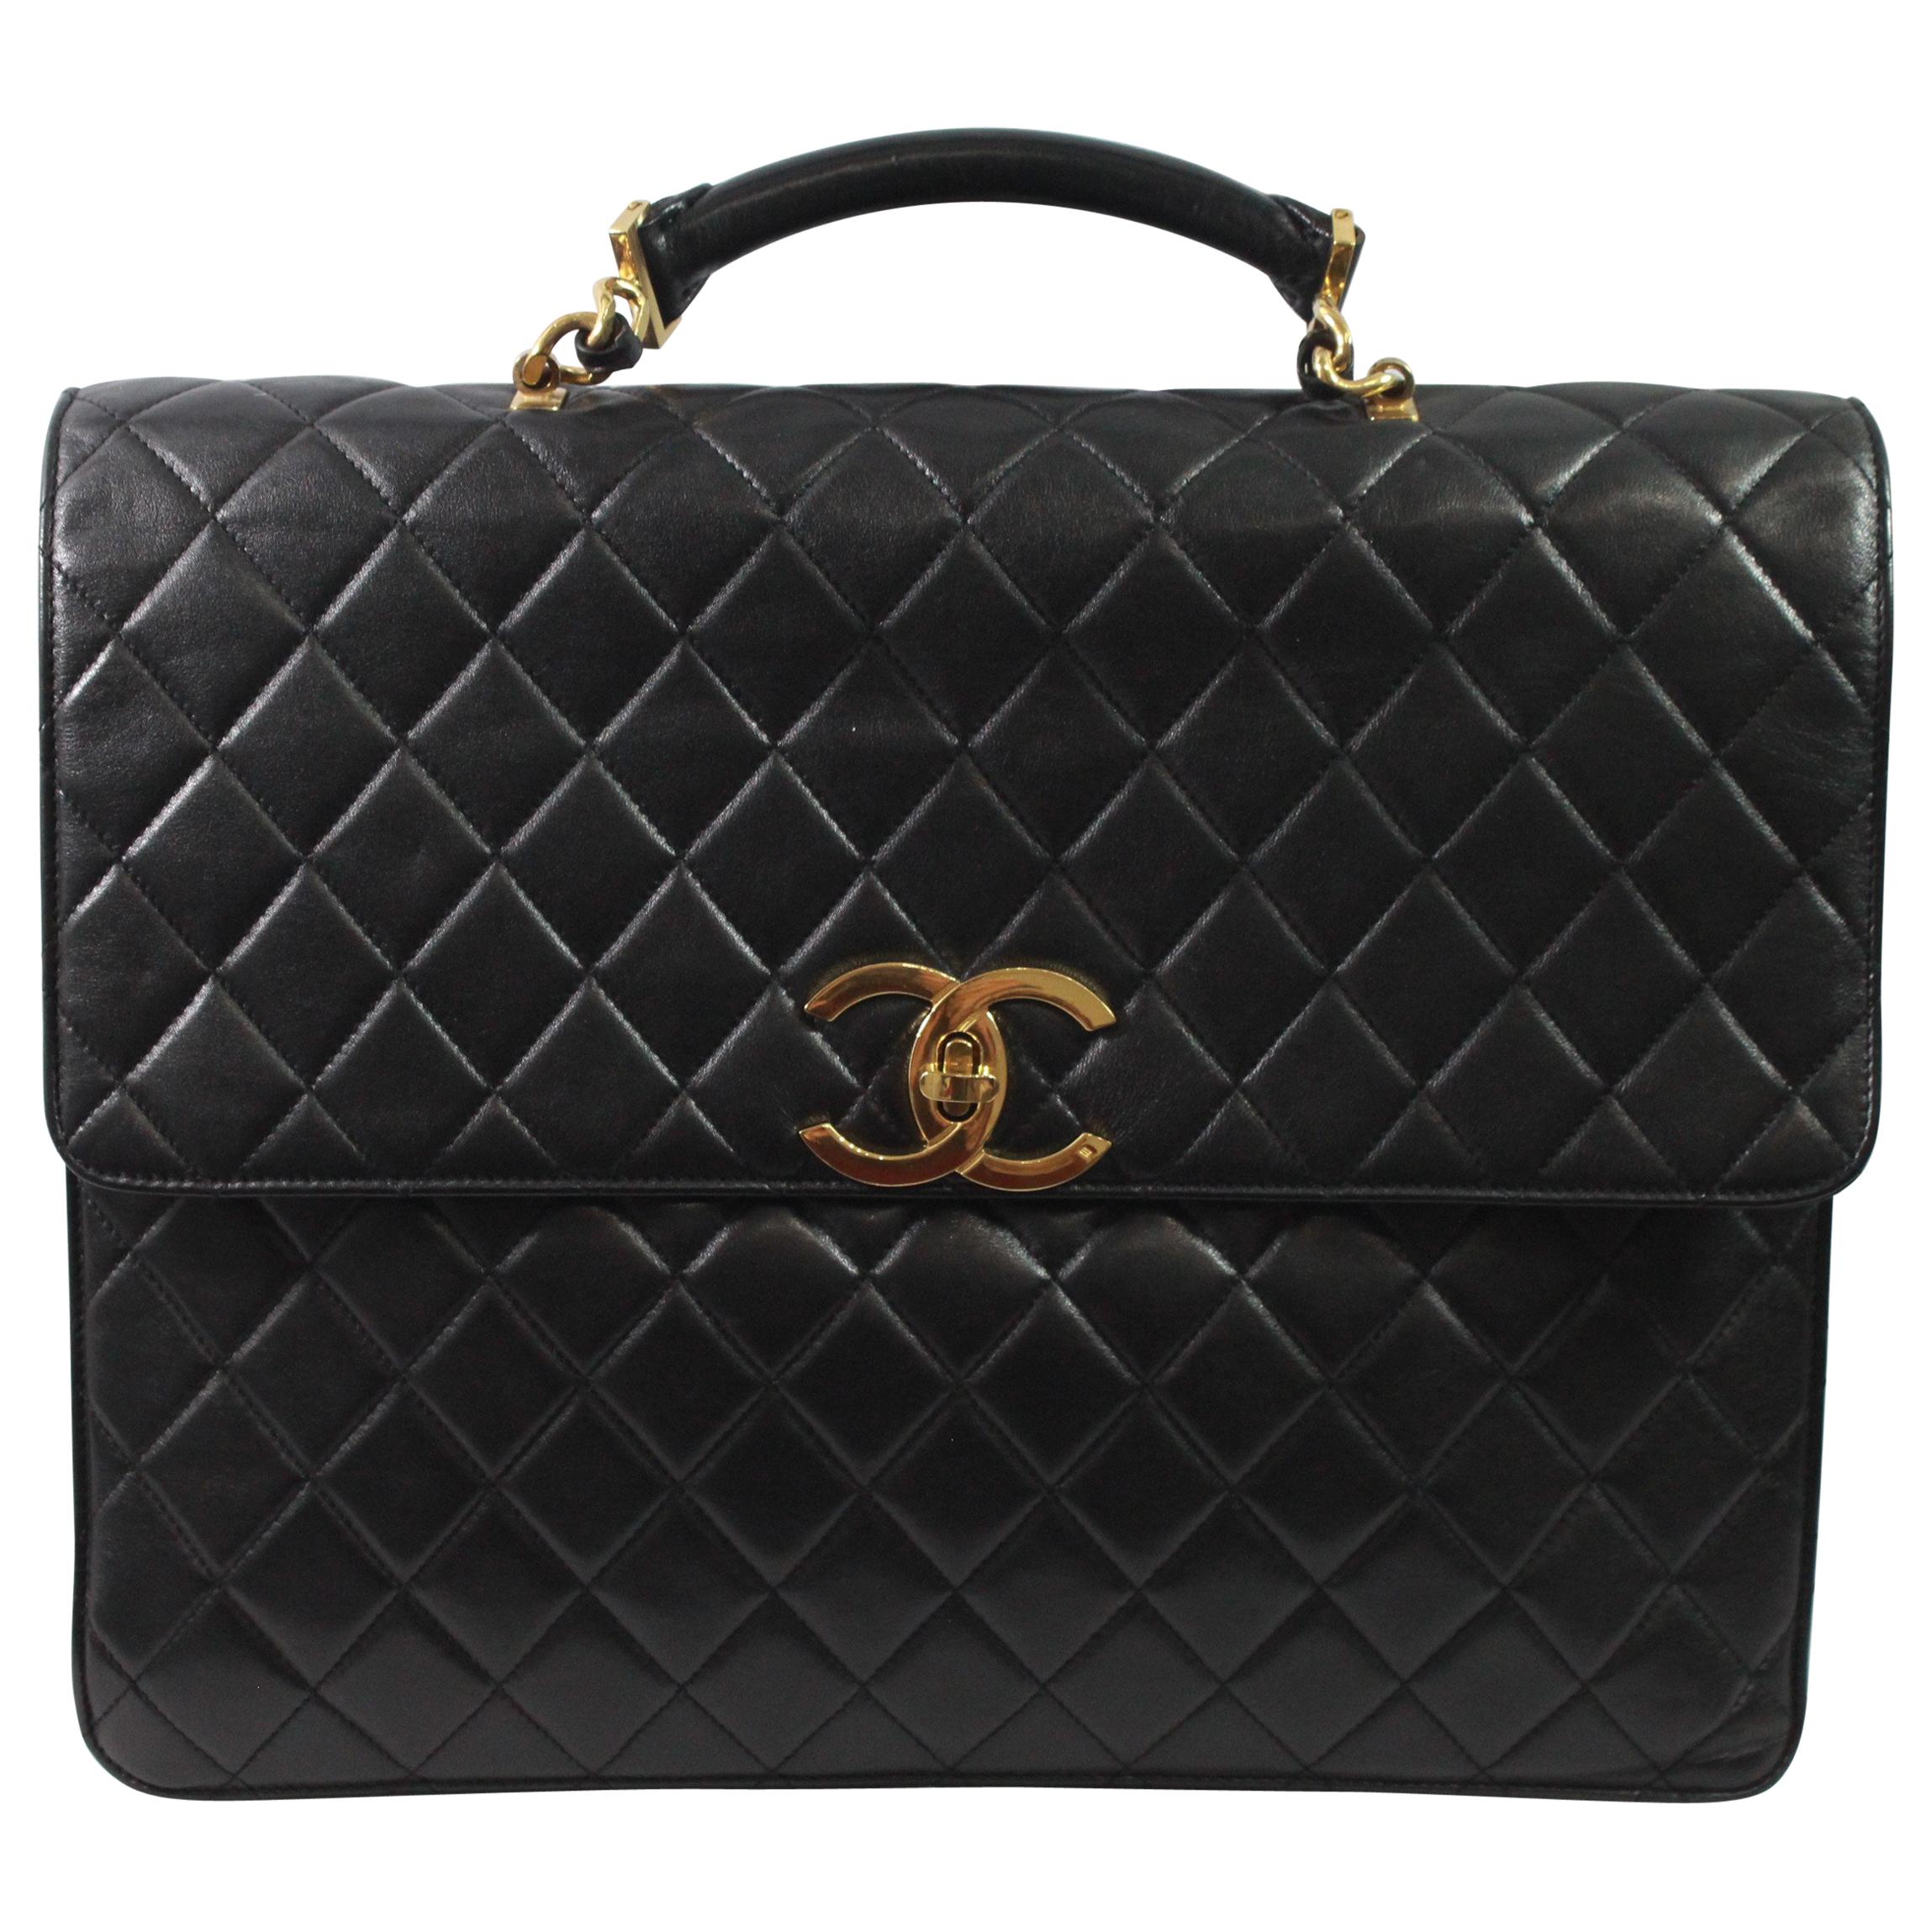 Chanel Maxi Jumbo  Briefcase in Black Lambskin leather